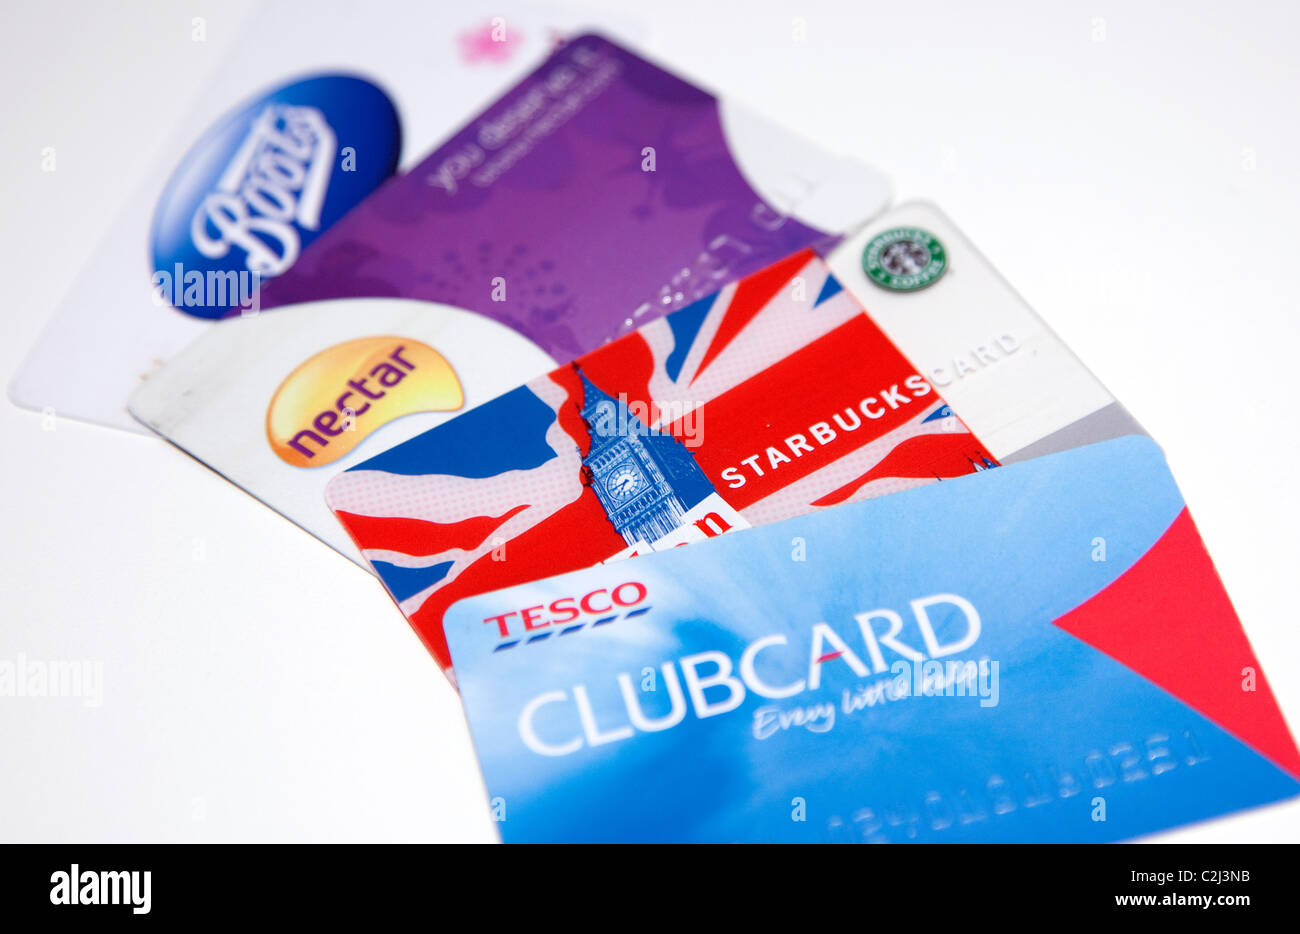 UK shopper's retail loyalty & reward cards, London Stock Photo